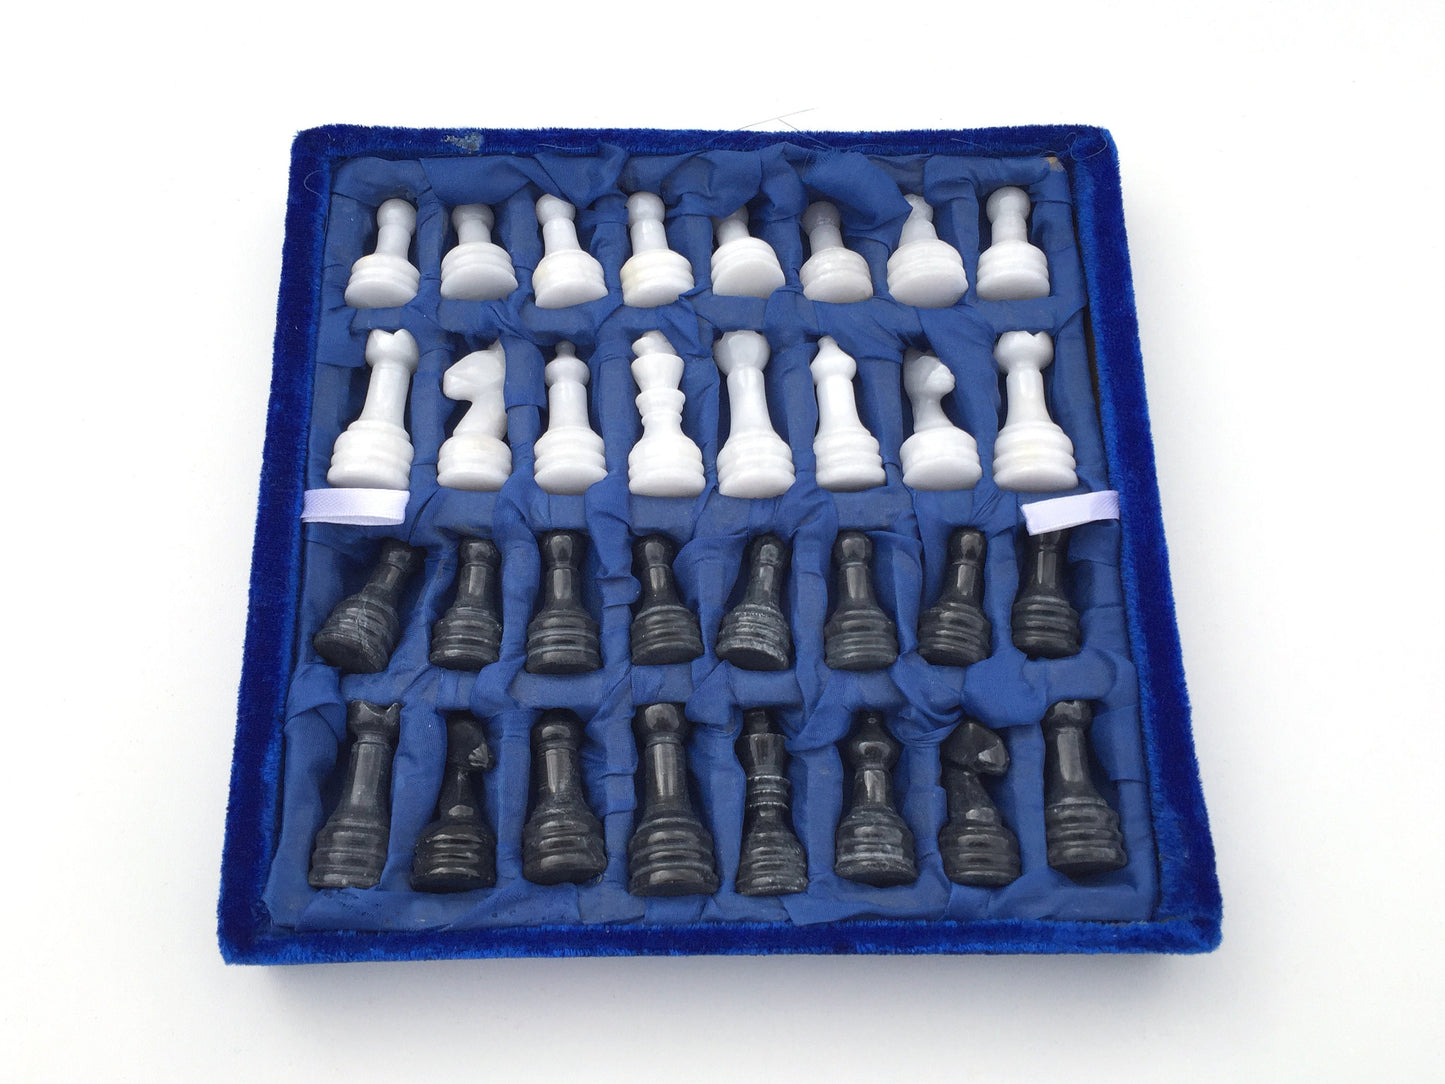 Schachspiel gerade Kante Olivenholz Schachbrett Gr. M inkl. 32er  Schachfiguren aus Marmor